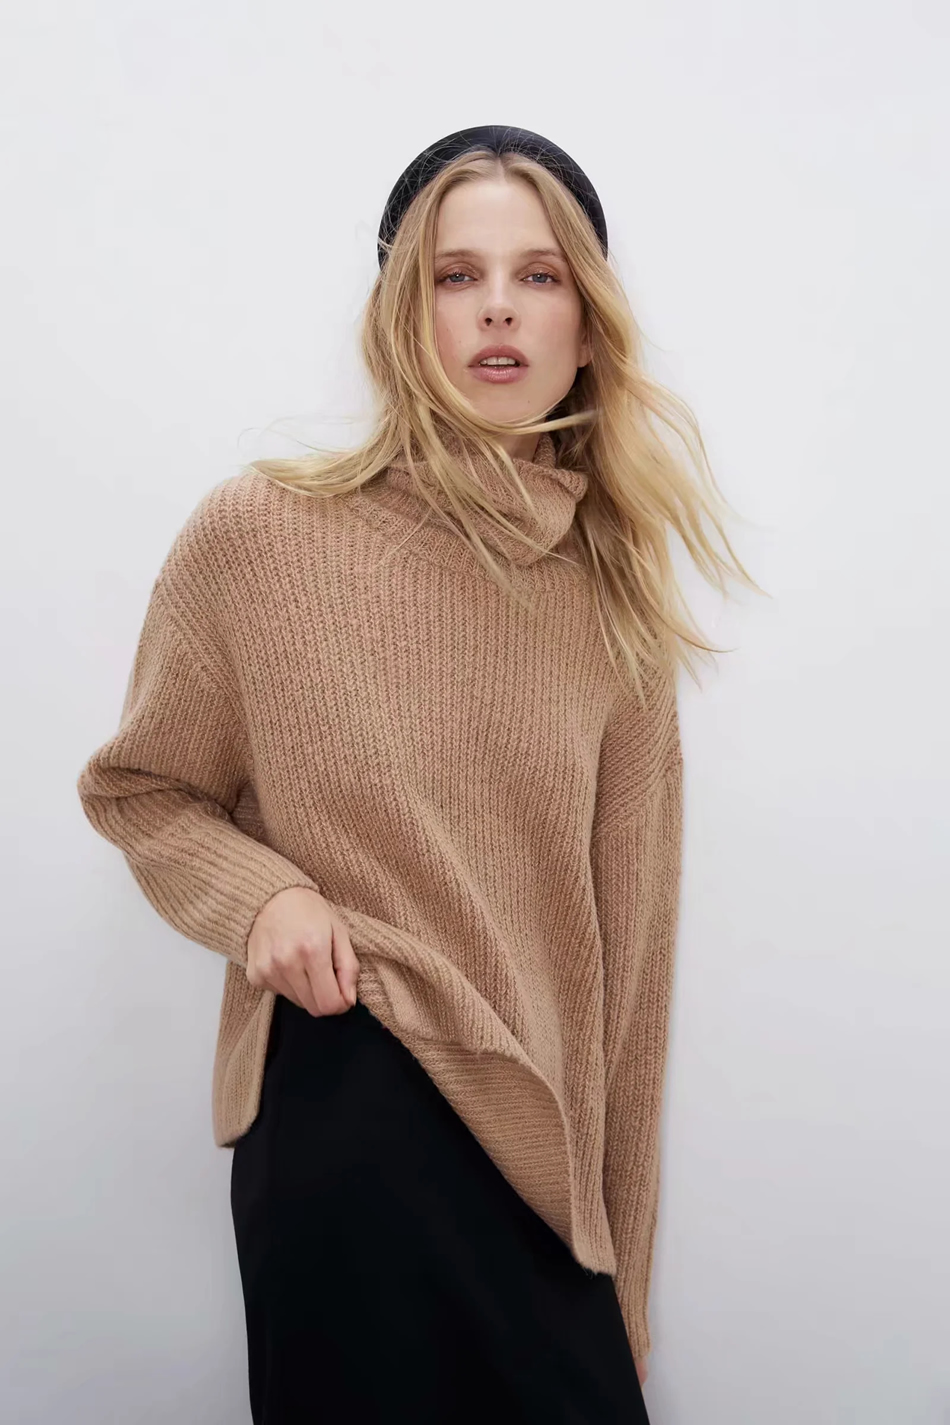 Fashion Gray Alpaca High Neck Blend Loose Knit Sweater,Sweater